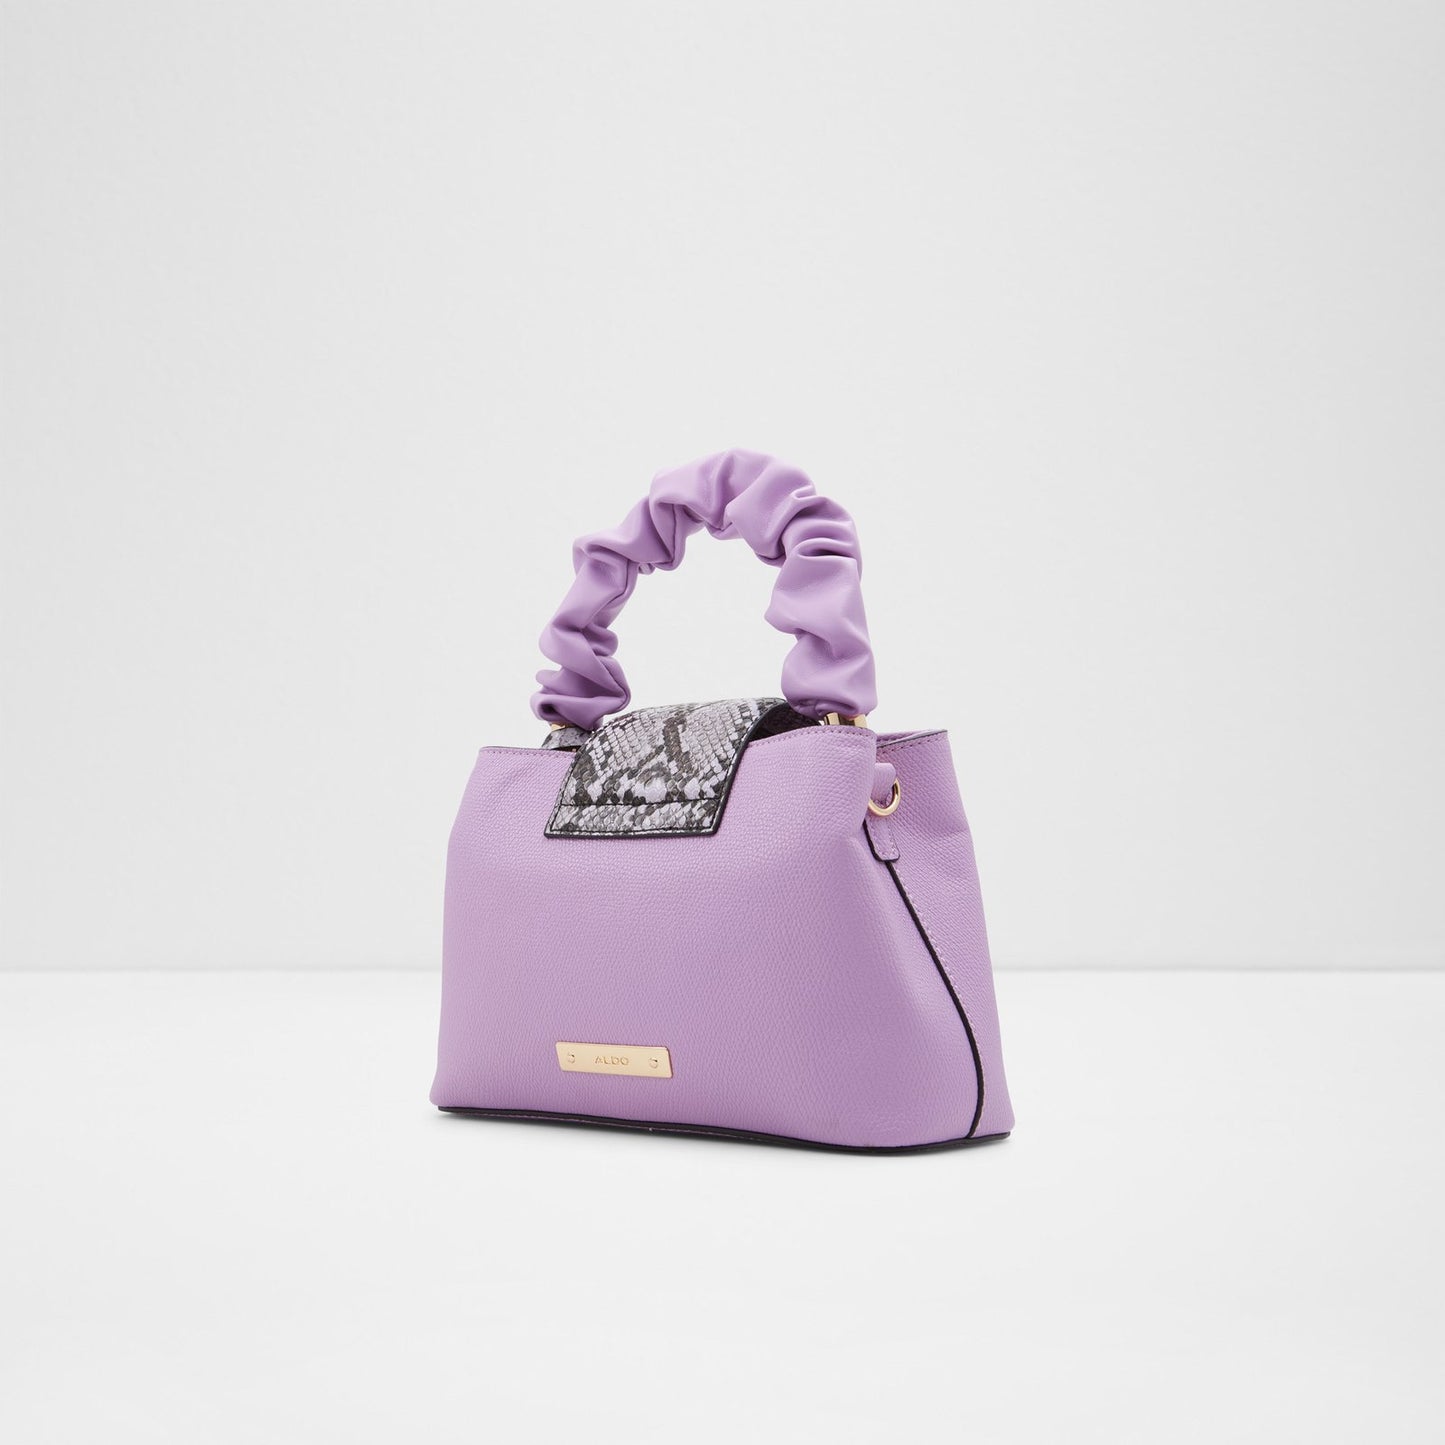 Aldo Snakie Top Handle Bag- Bright Purple